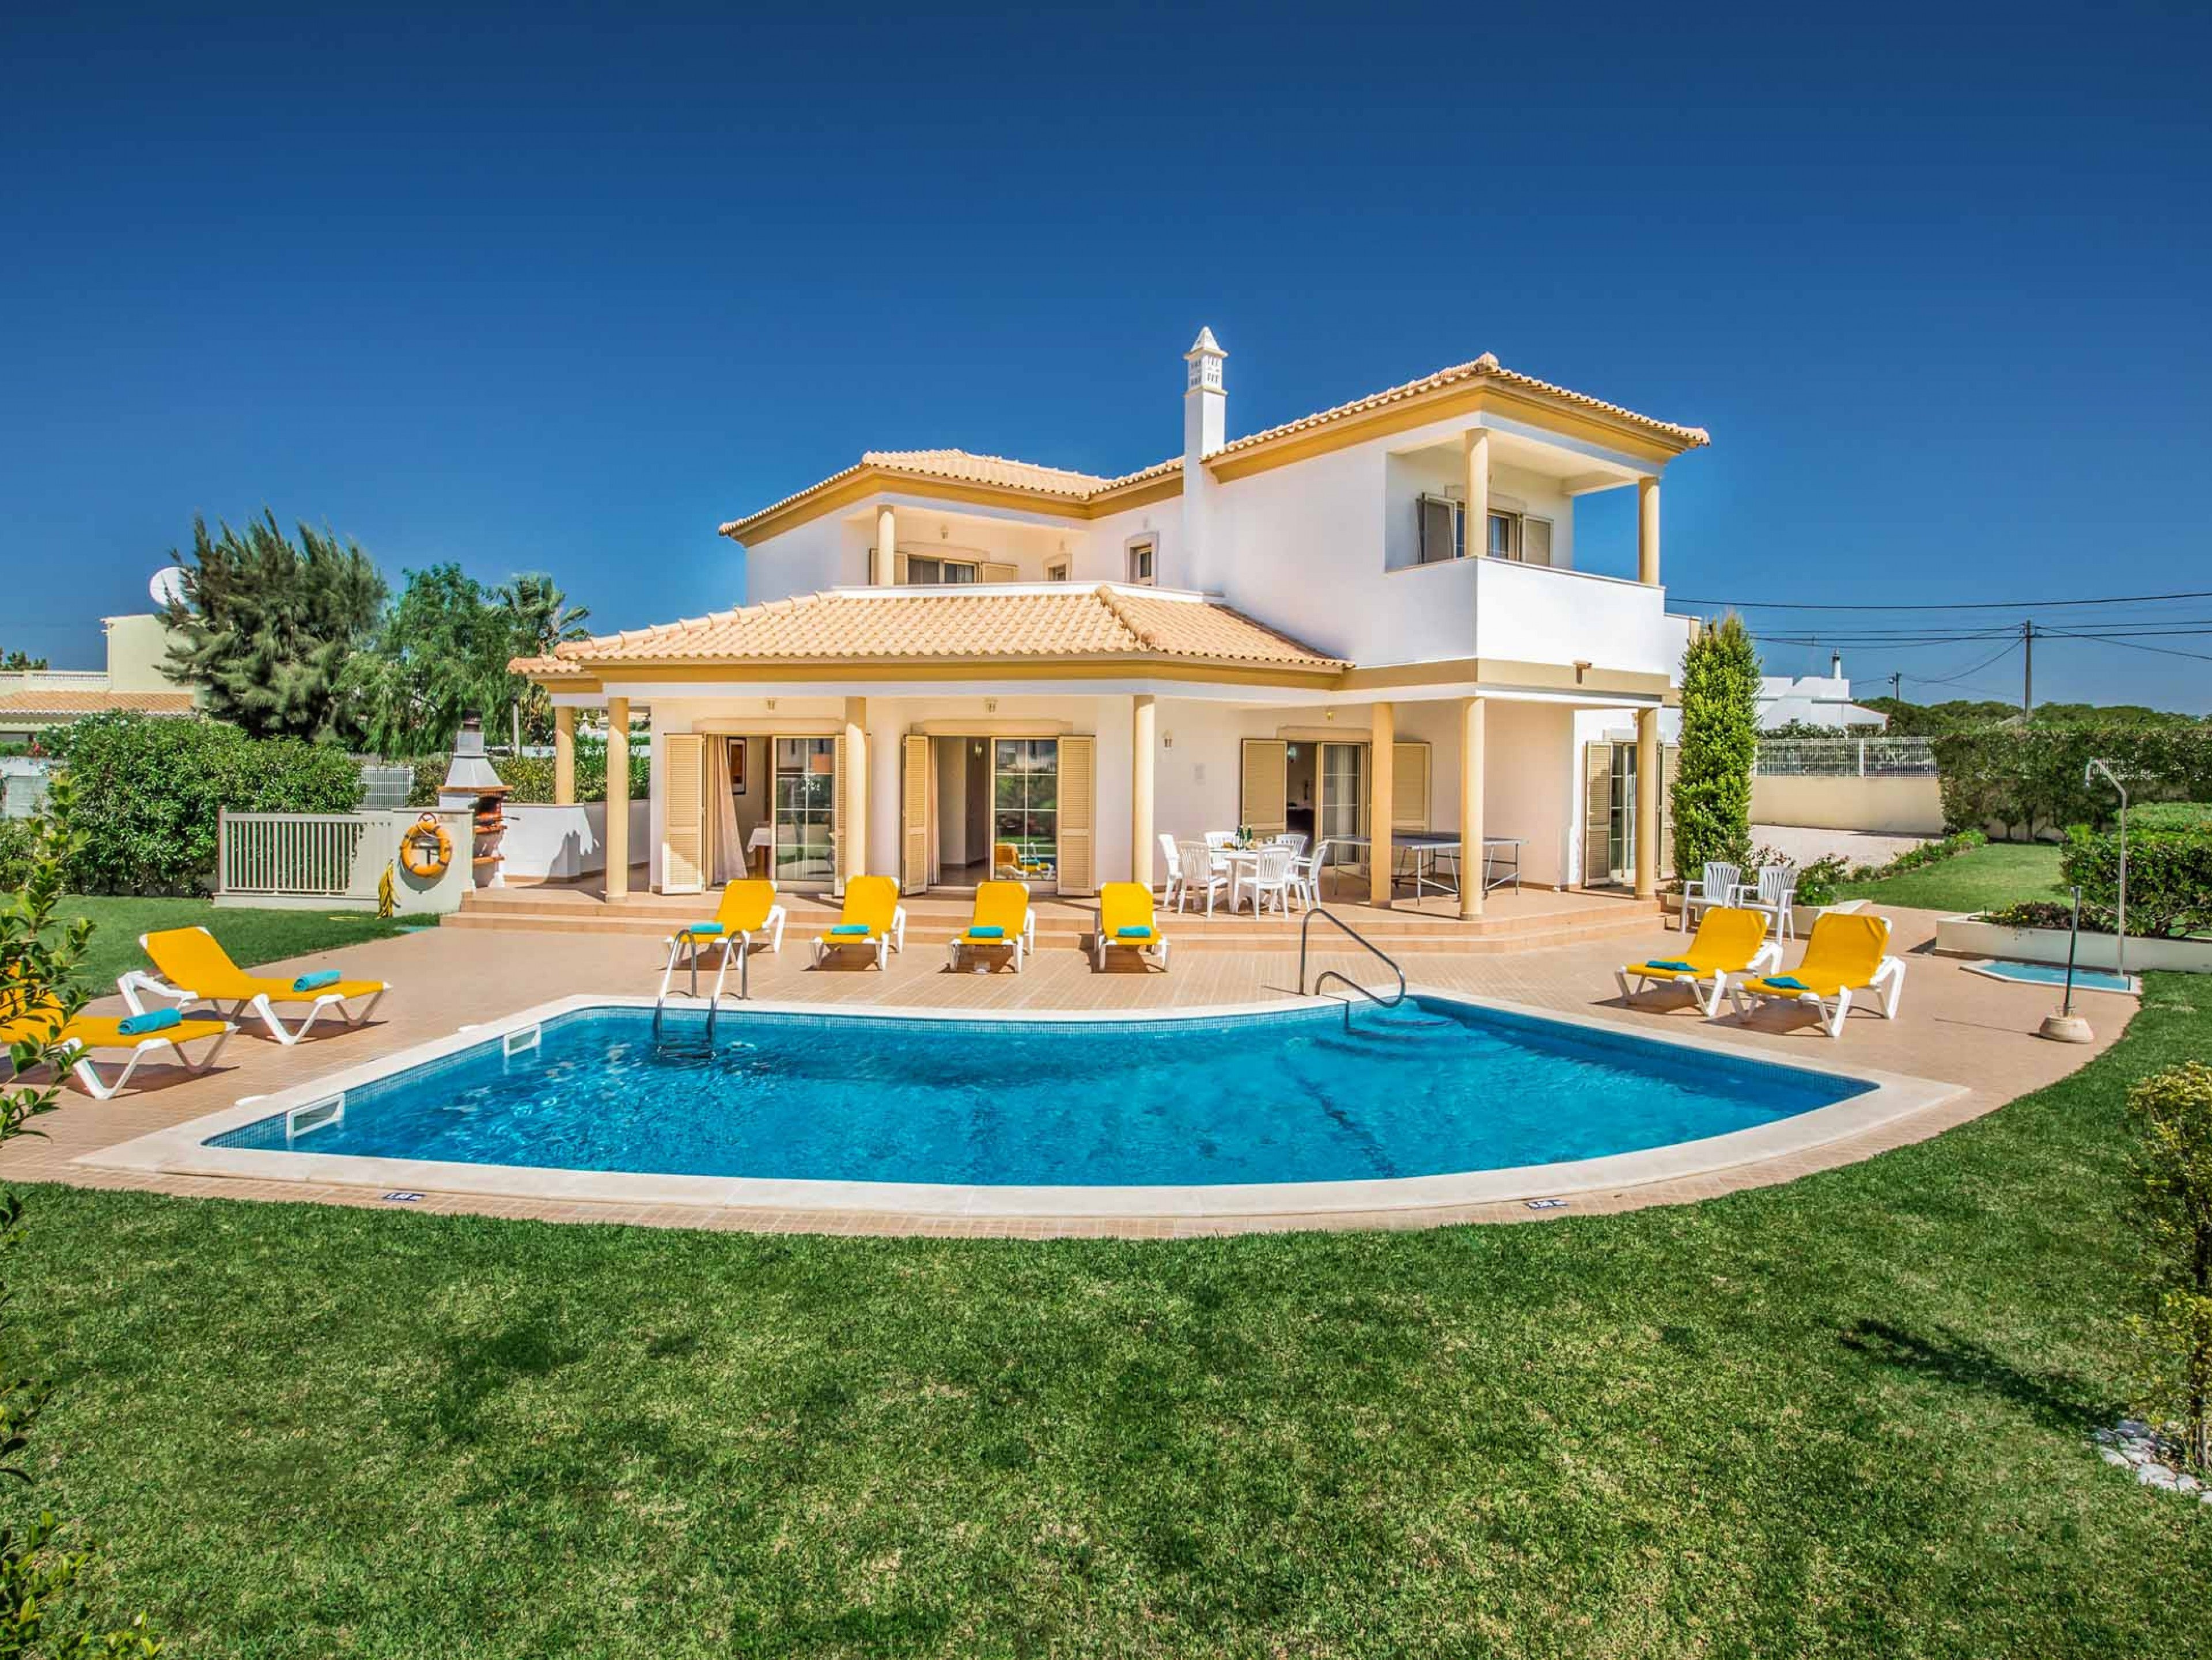 Villa Vega 4 bedroom vacation rentals in Europe